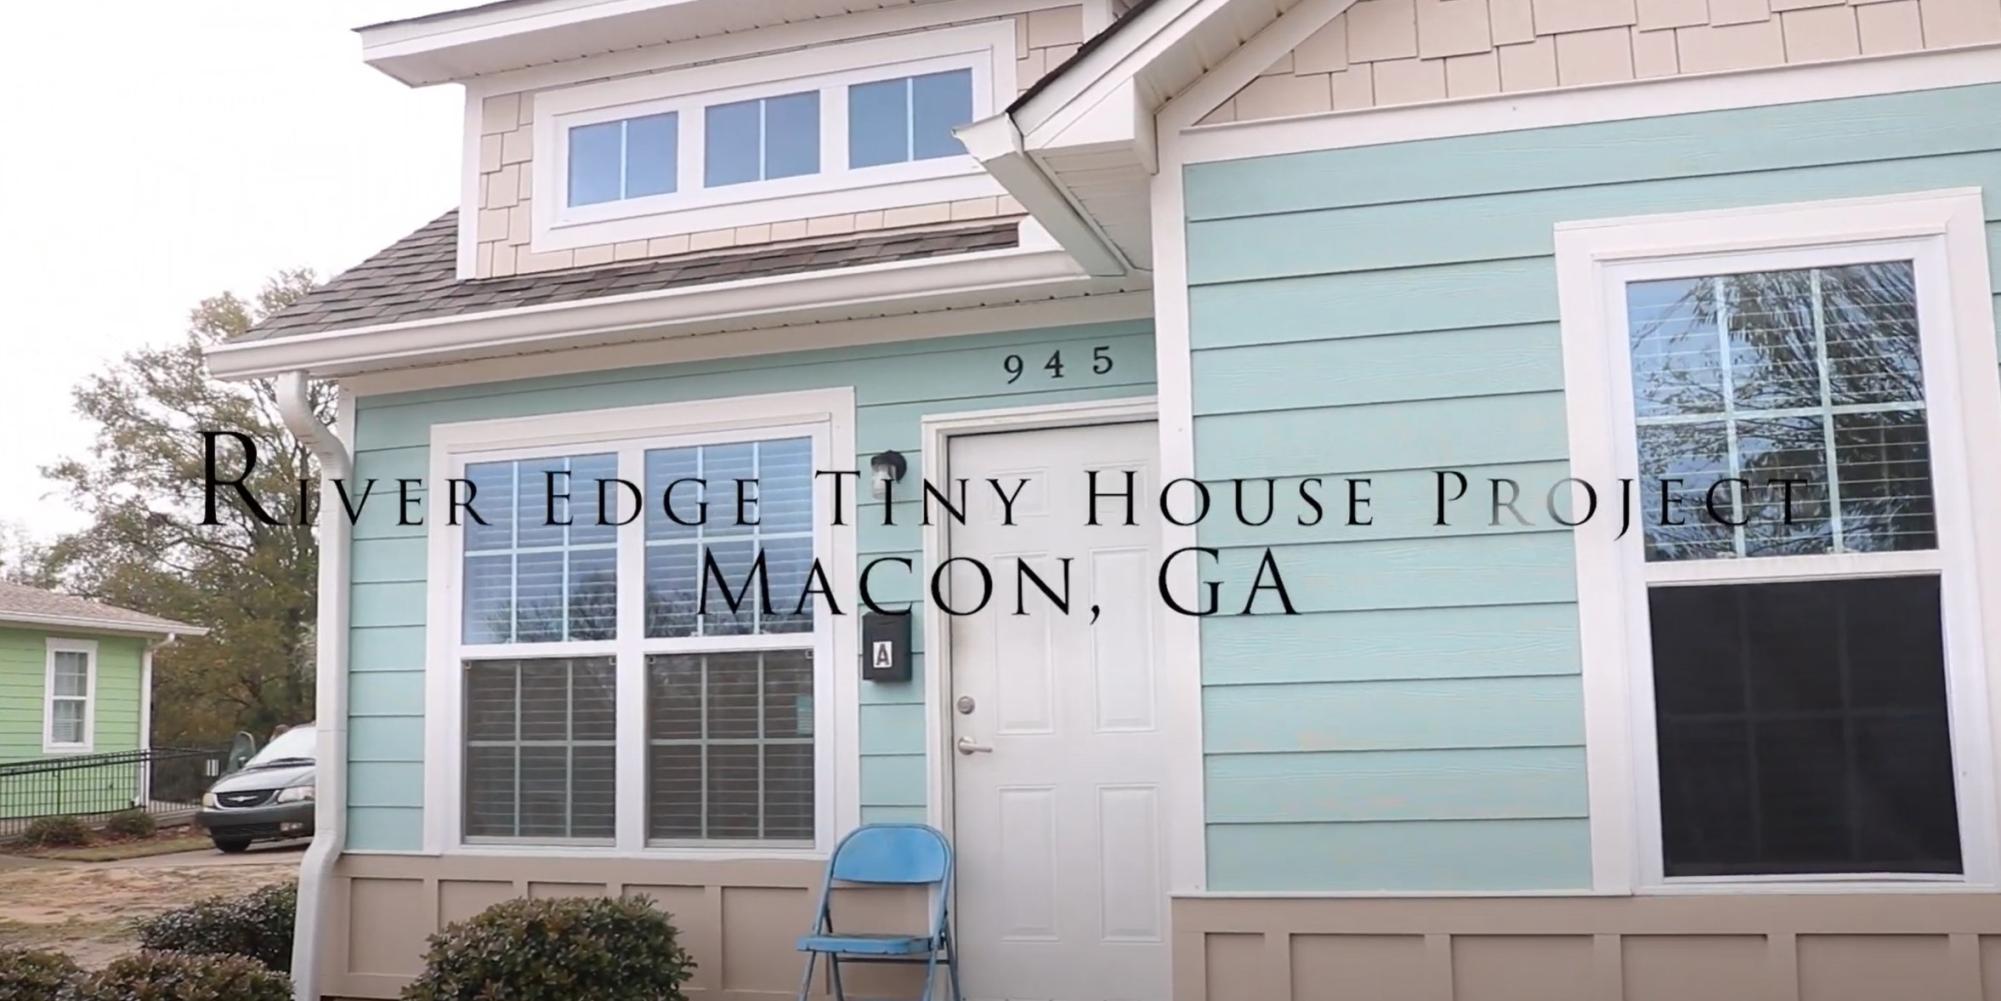 Macons Tiny House Project